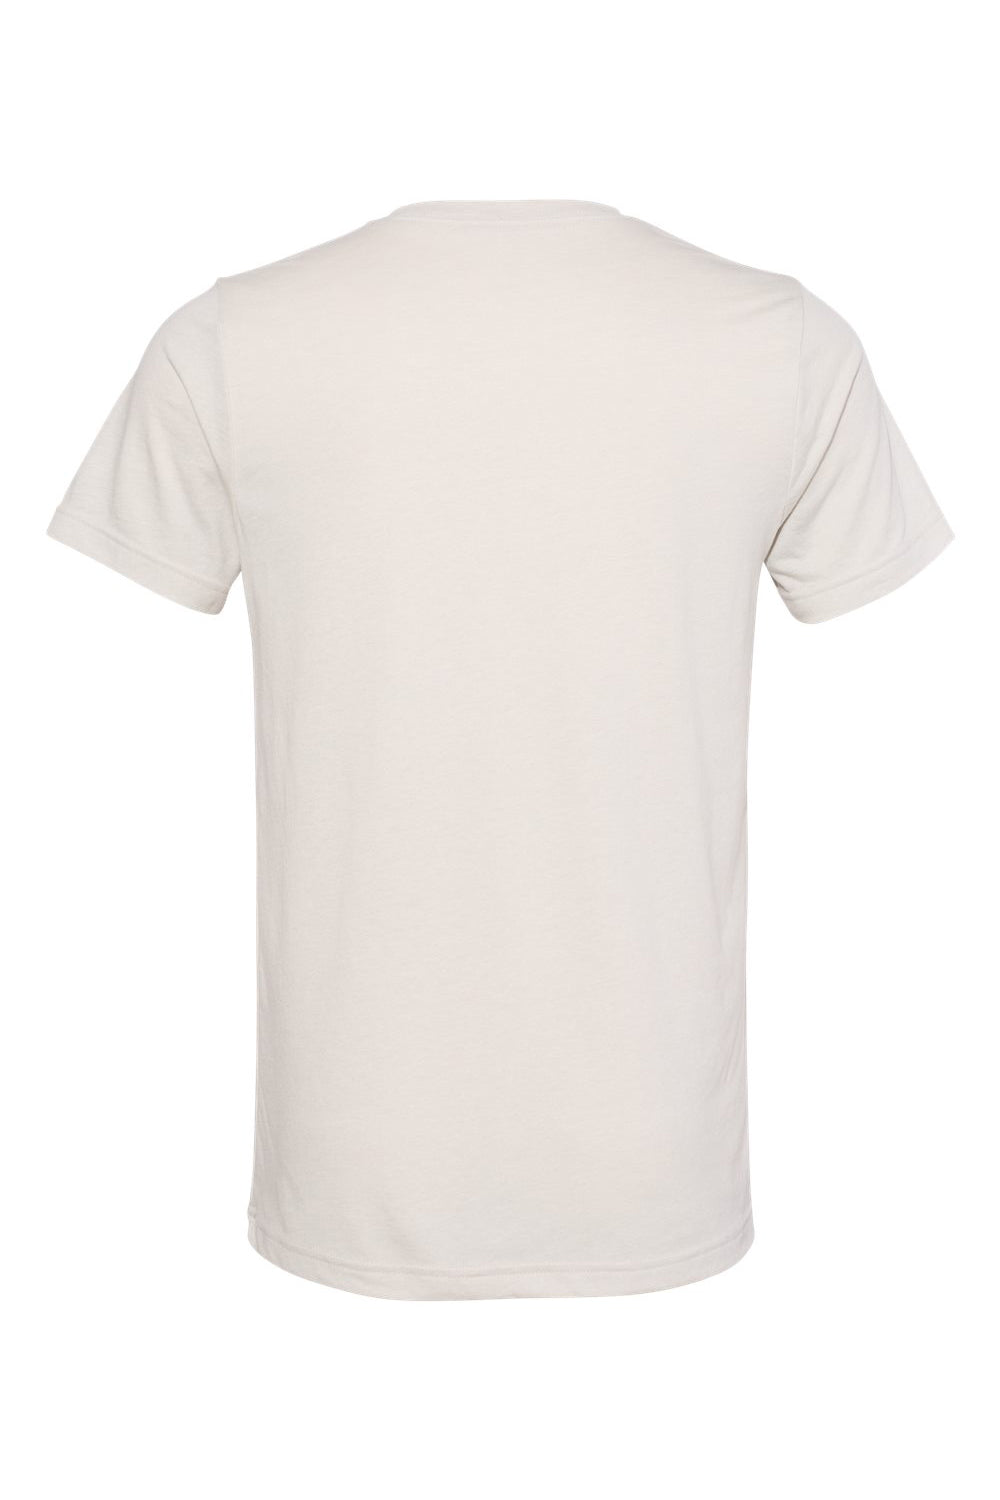 Bella + Canvas BC3415/3415C/3415 Mens Short Sleeve V-Neck T-Shirt Cement Grey Flat Back